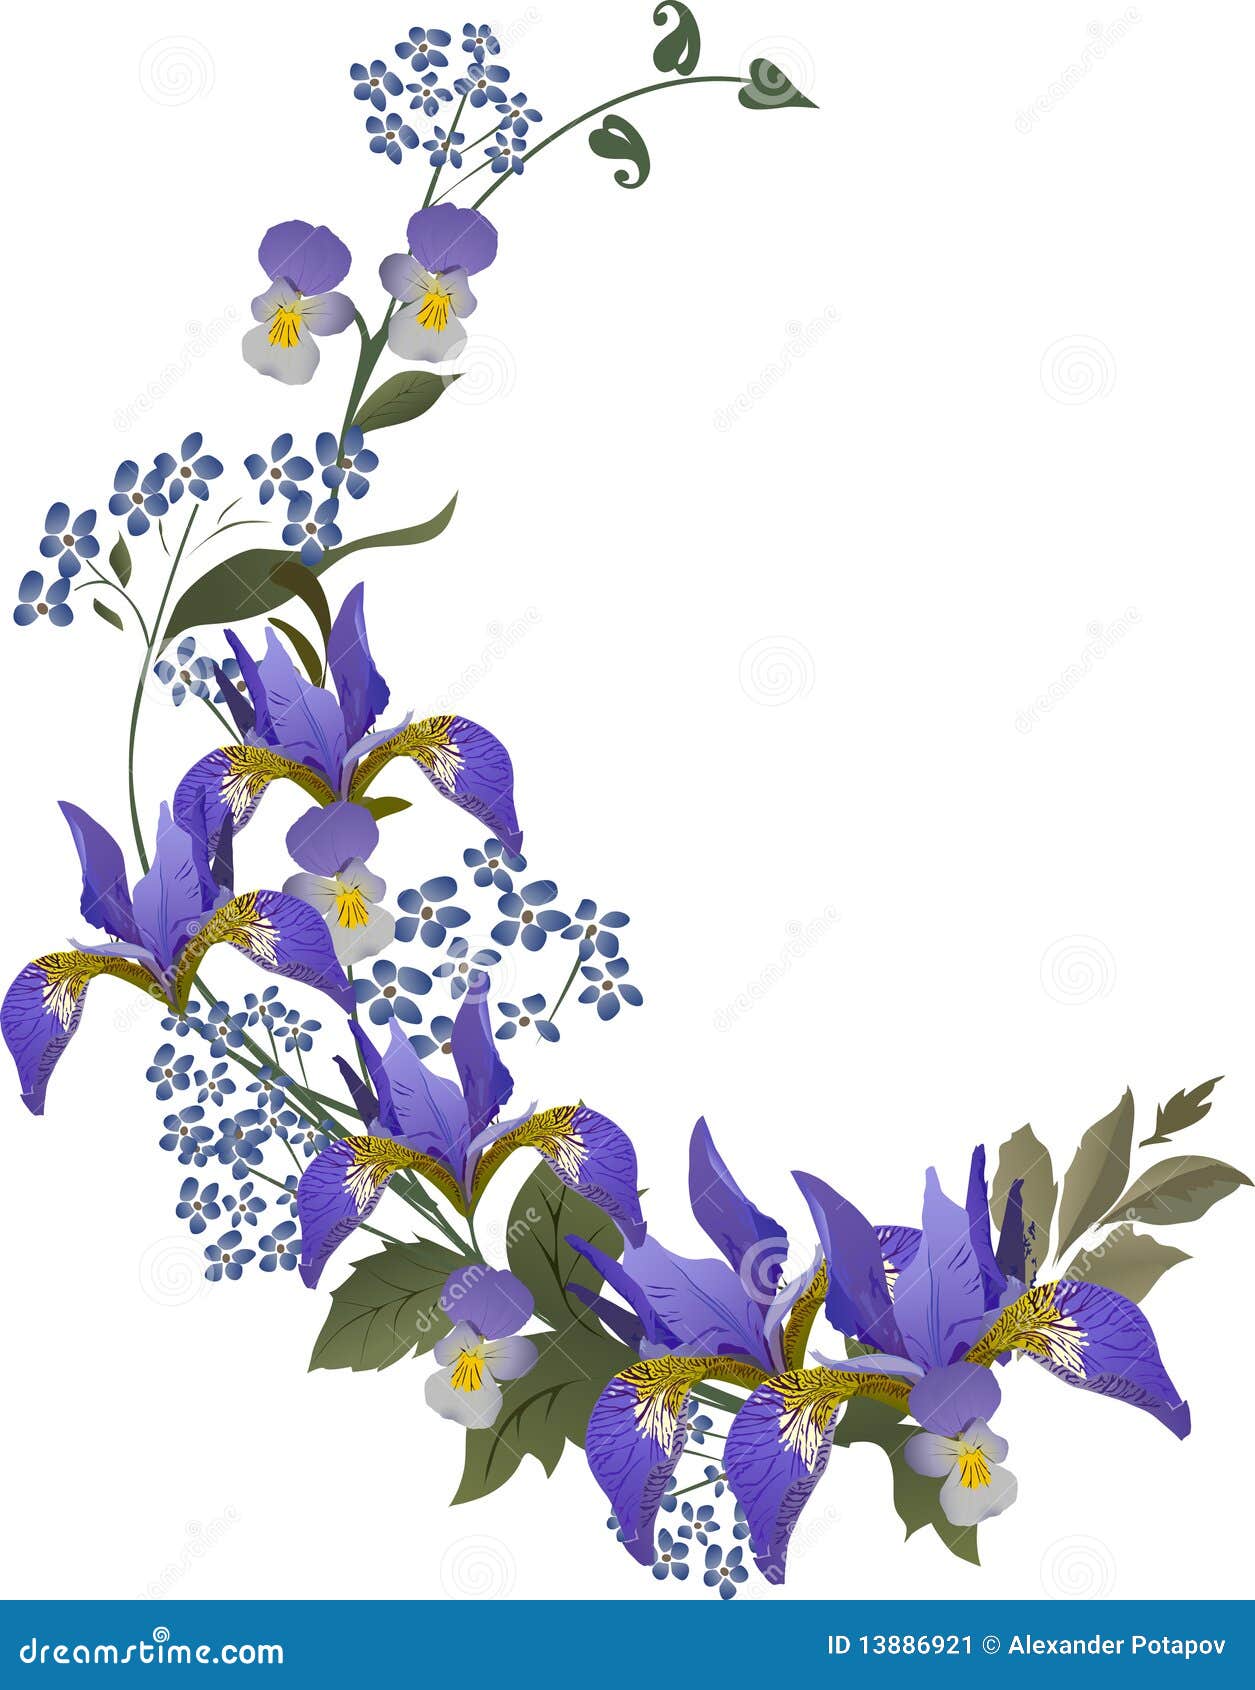 clipart iris flower - photo #44